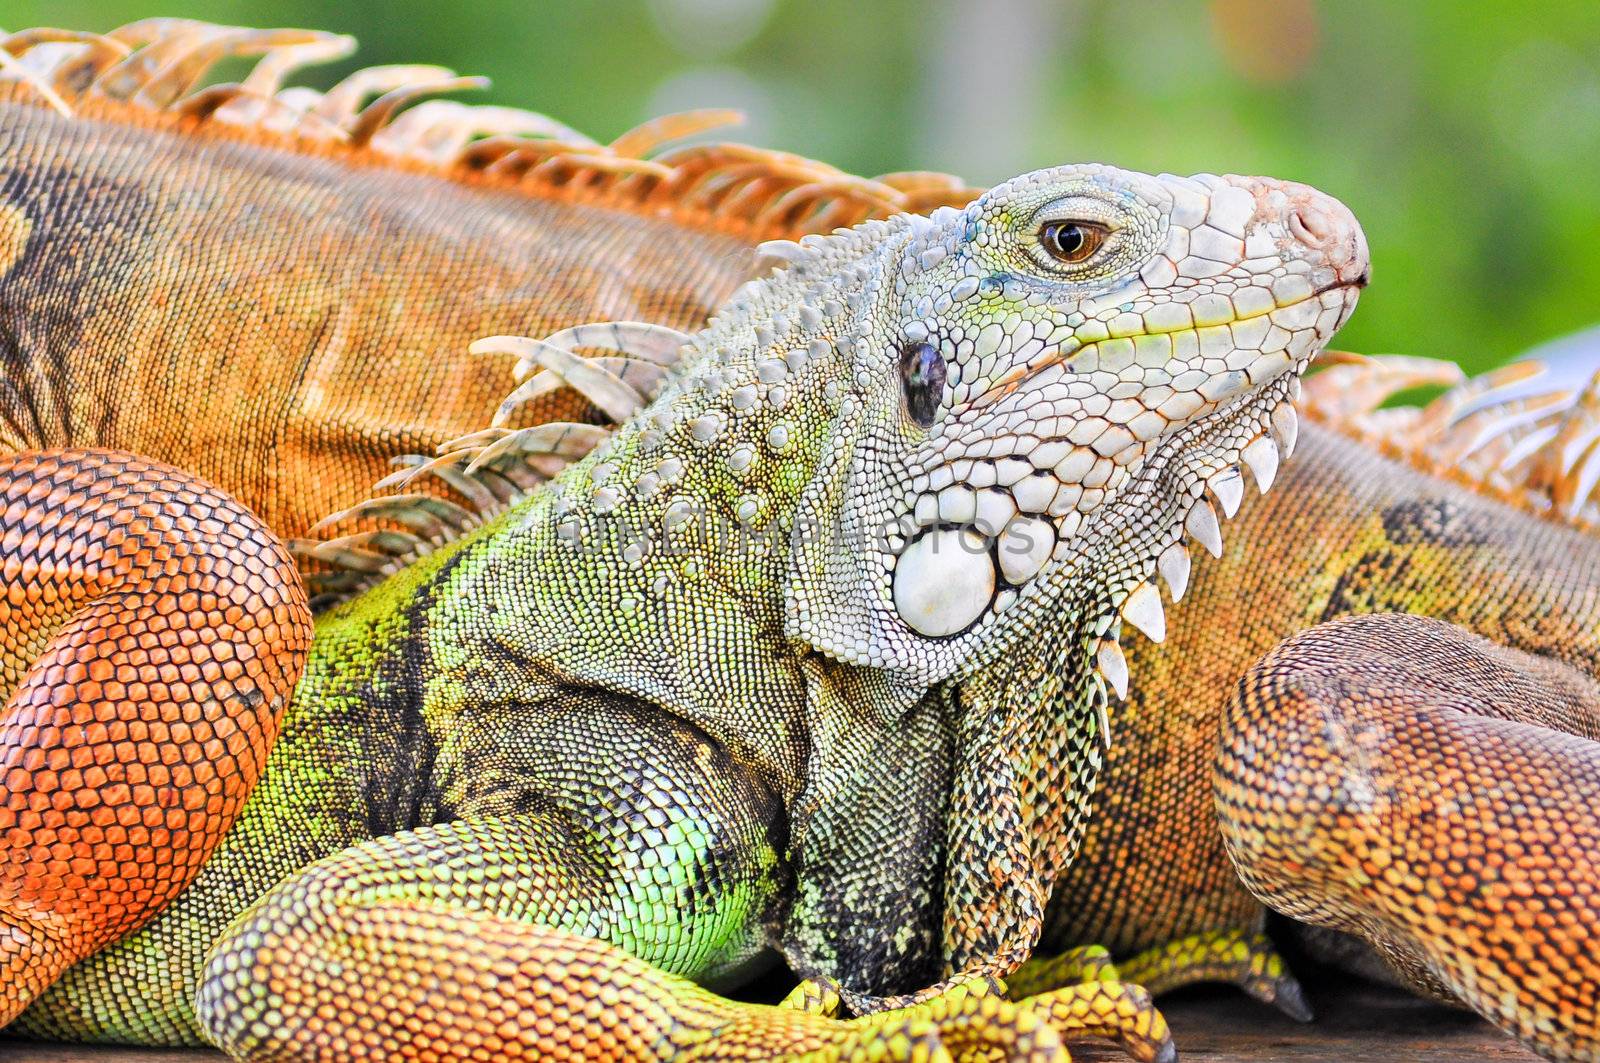 Colorful lizard close up detail, Bali, Indonesia